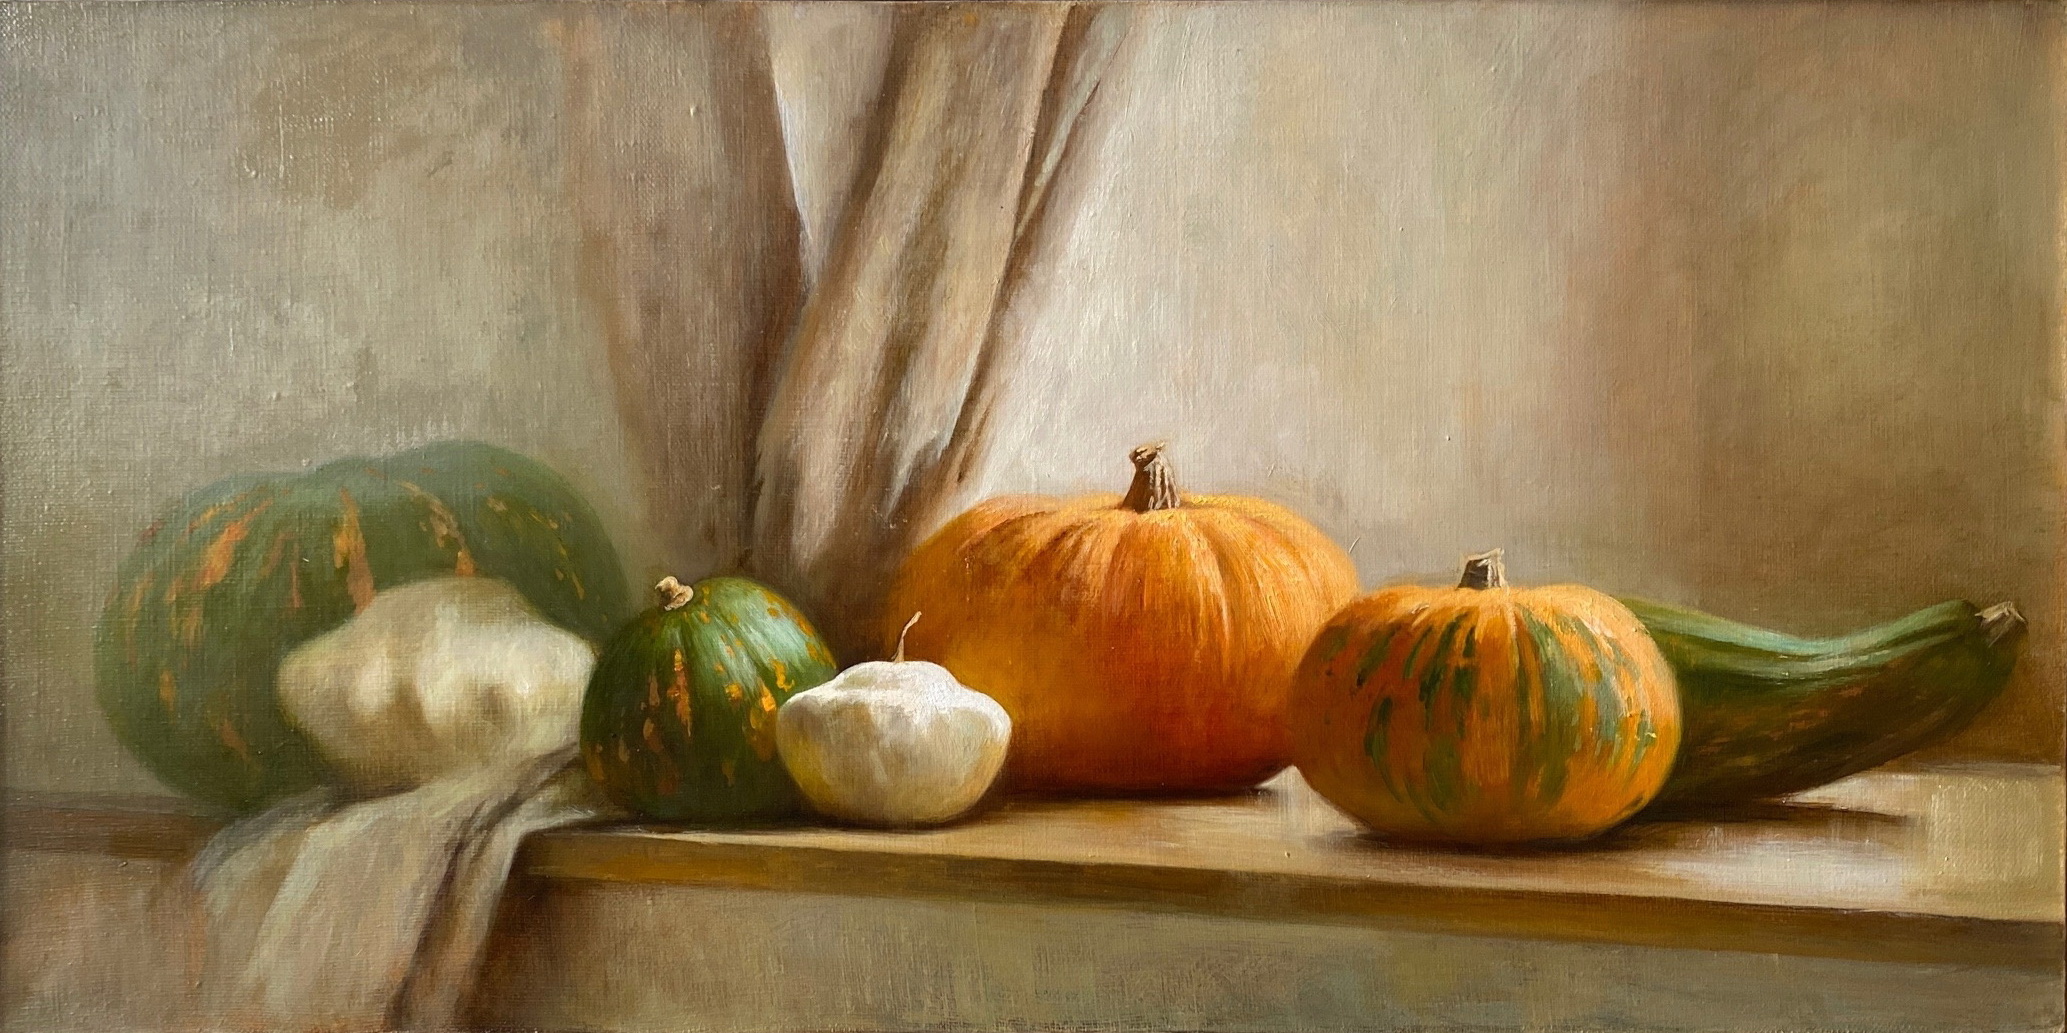 Pumpkins - 1, Evgenia Shchipakina, Buy the painting Oil